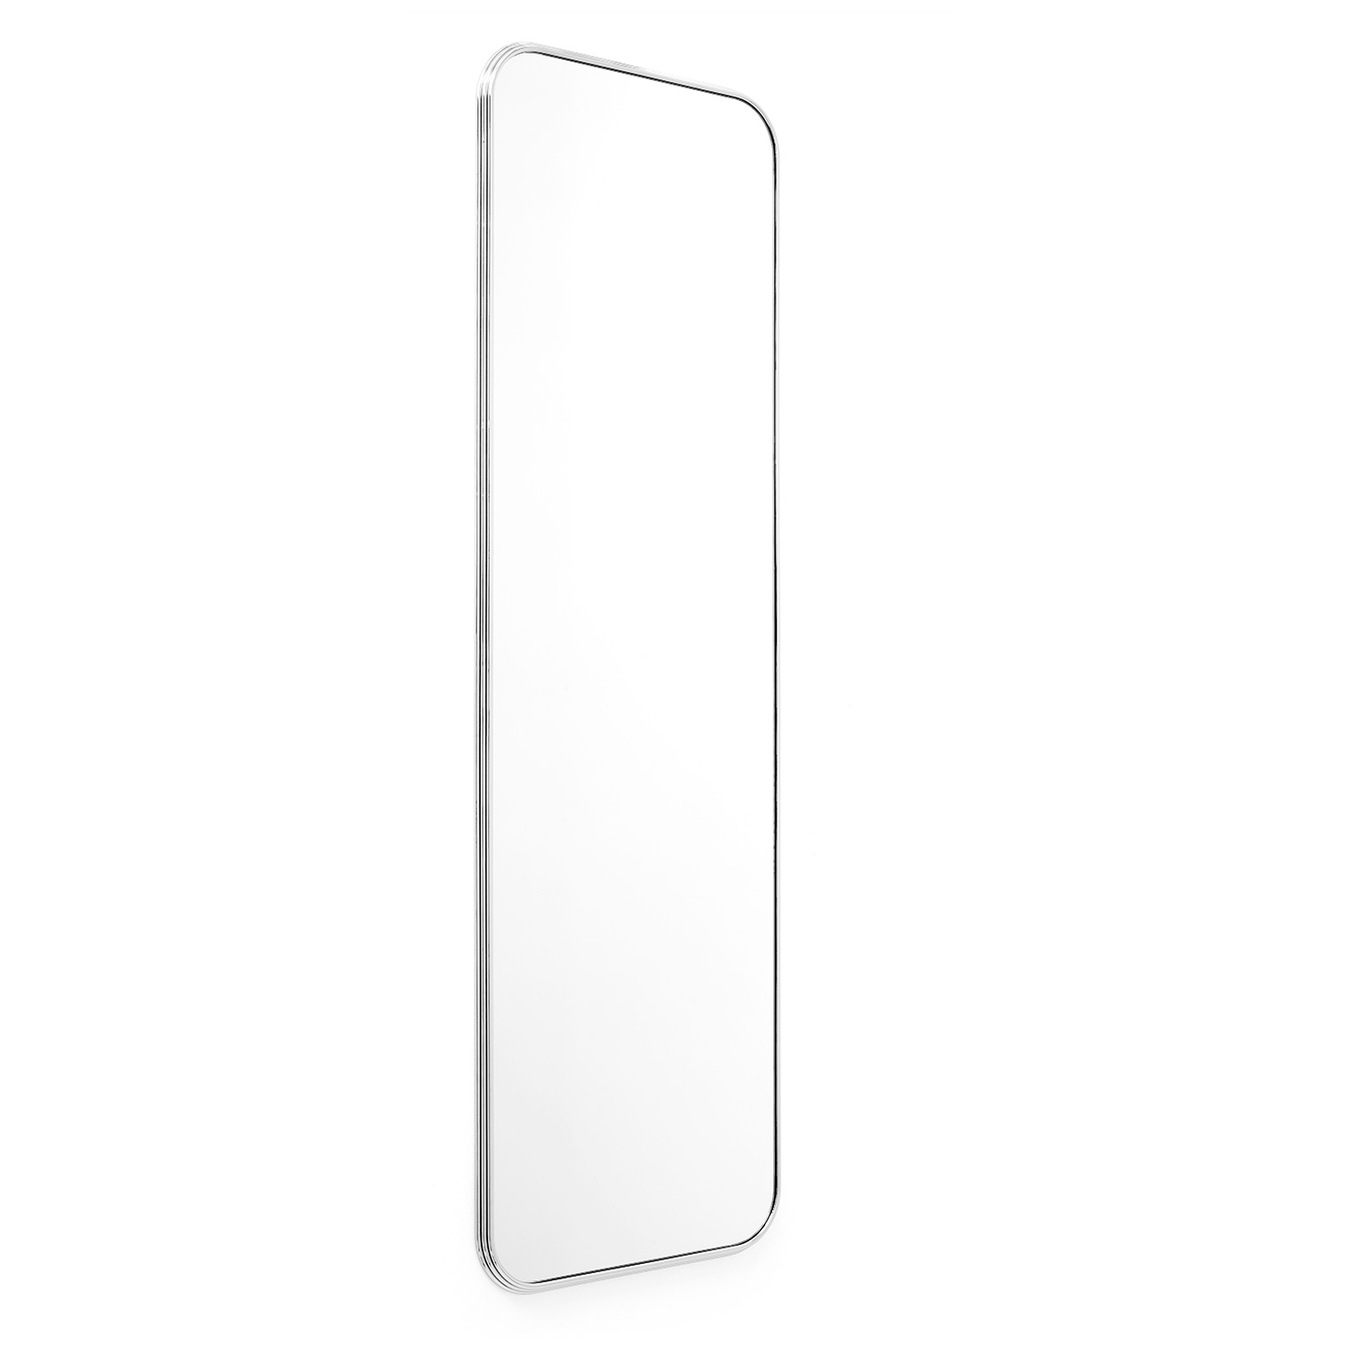 Sillon Spiegel SH7 60x190 cm, Chrom